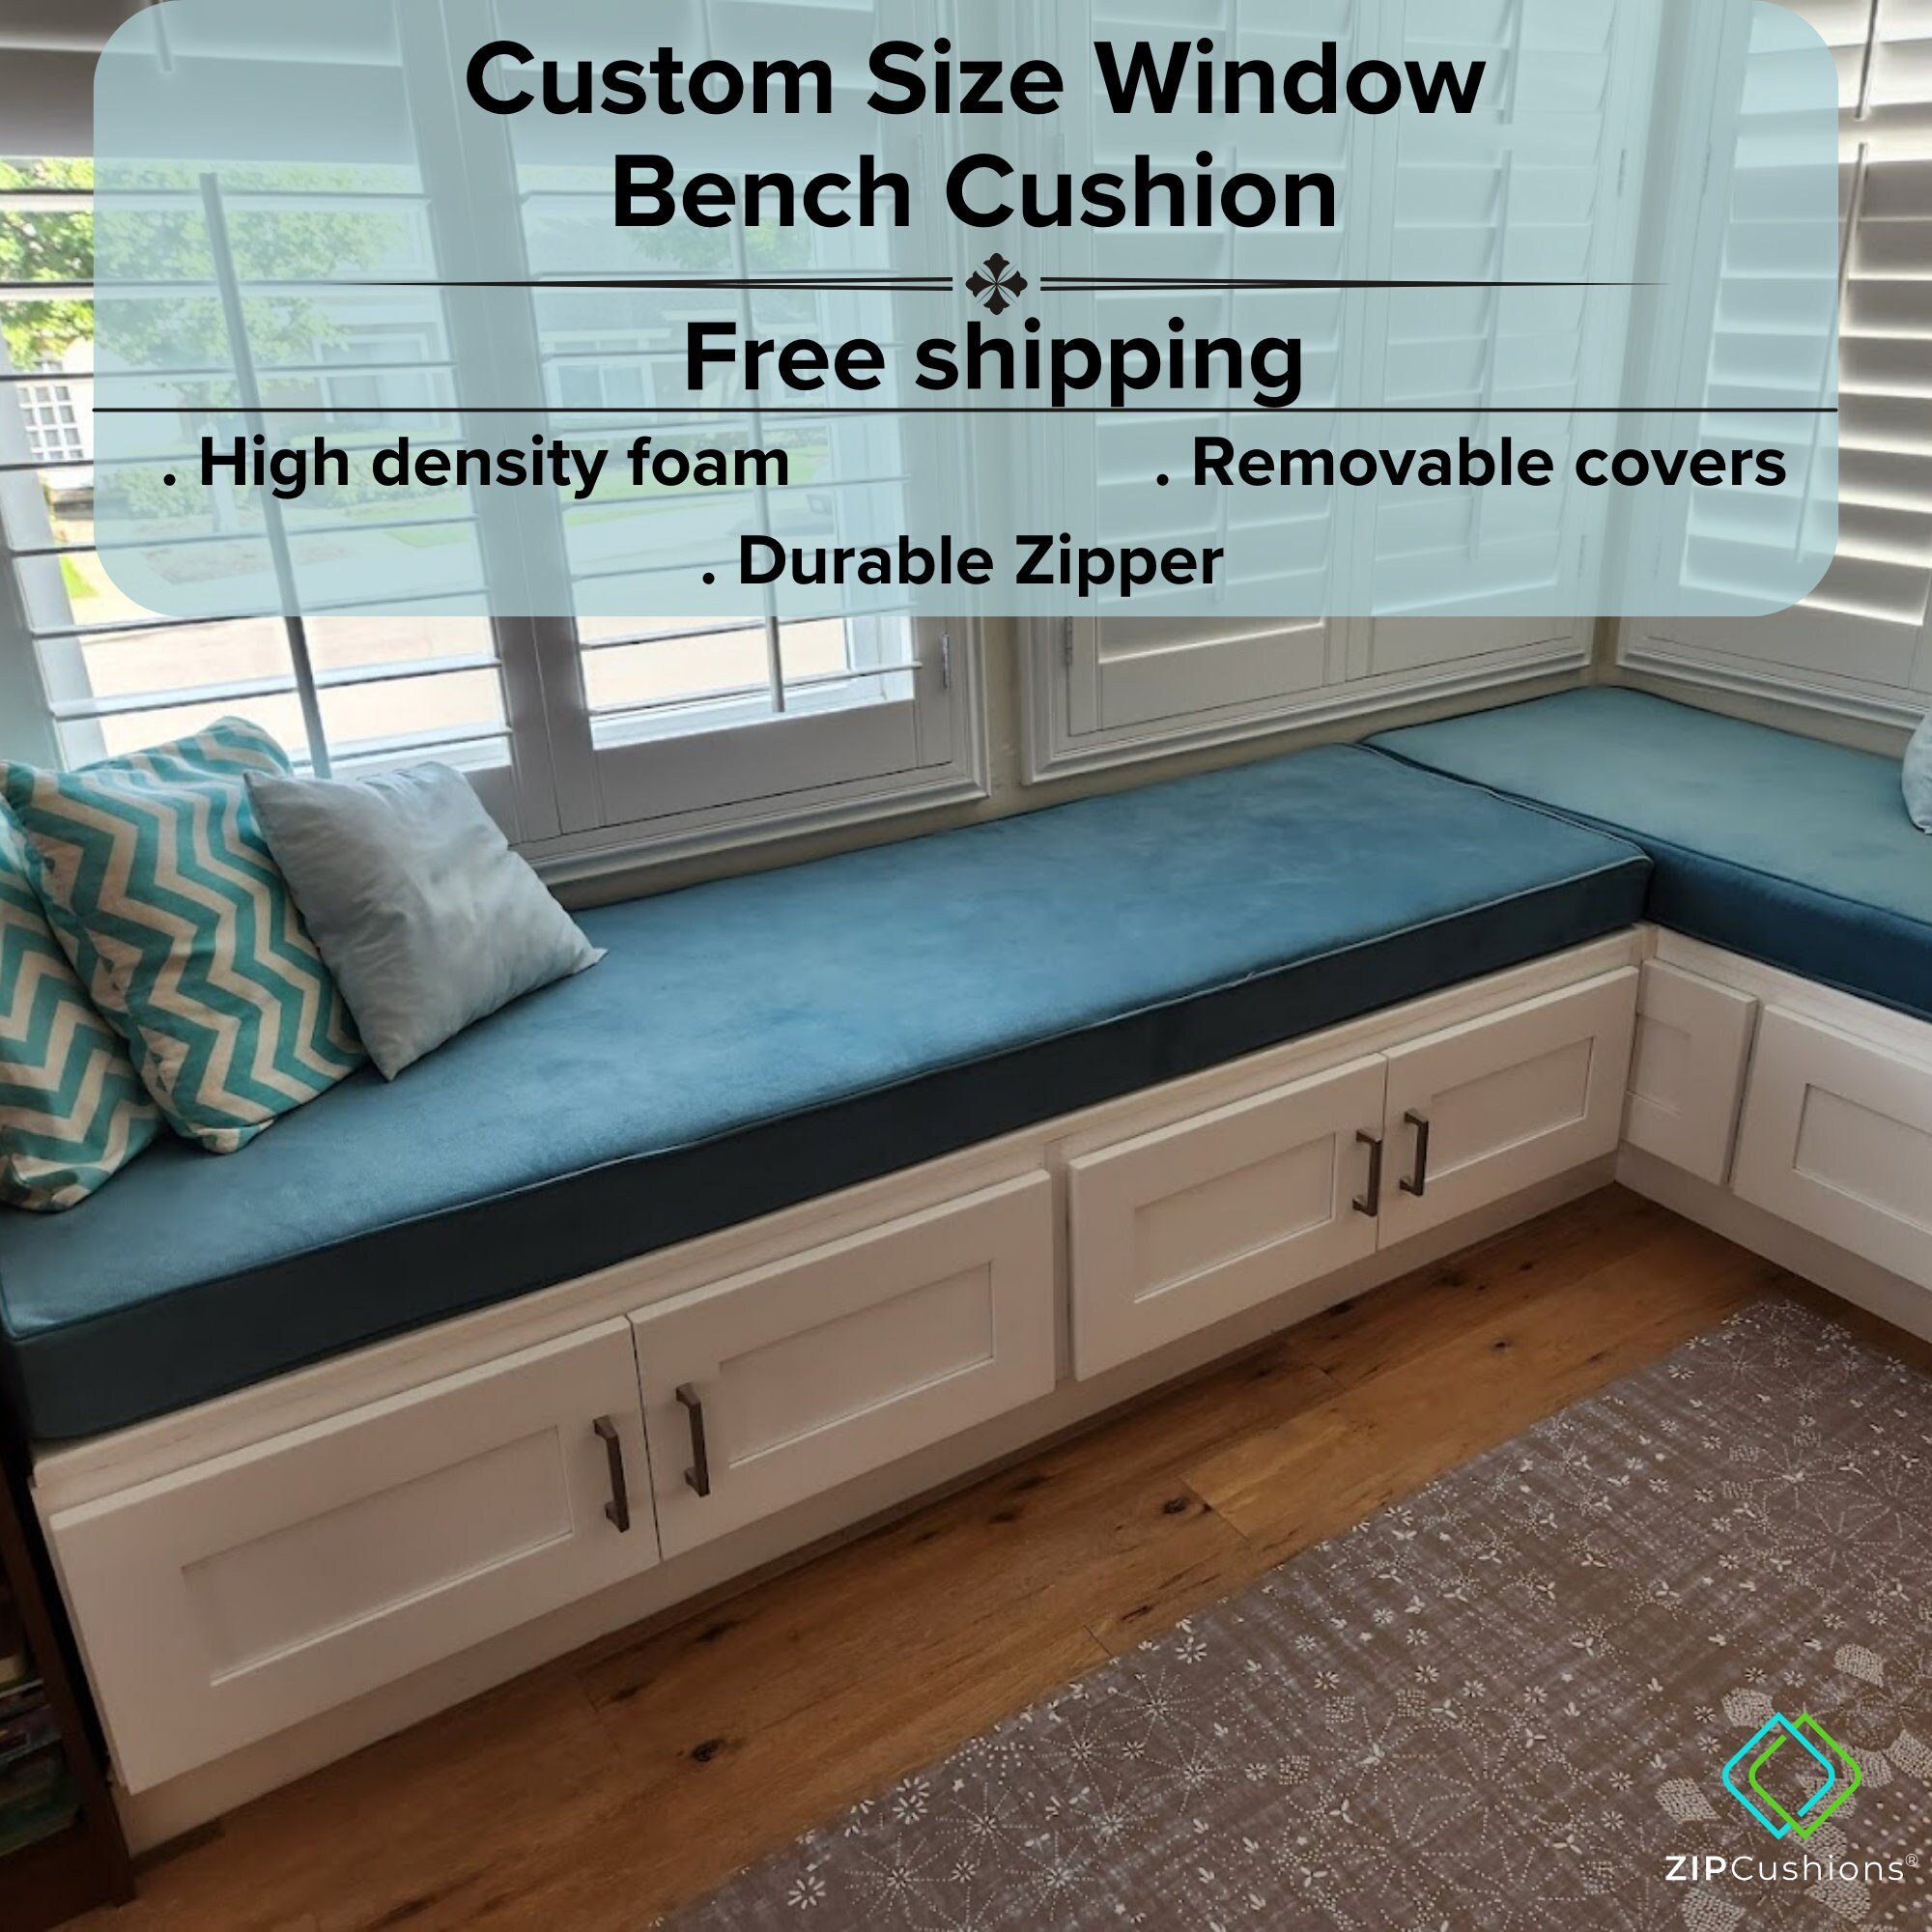 SXROMDA Customize Bench Cushion, Furniture Cushion, High Density Memory Foam, Linen Washable, Non-Slip Bench Pad for Shoe Bench Rack, Window, Piano